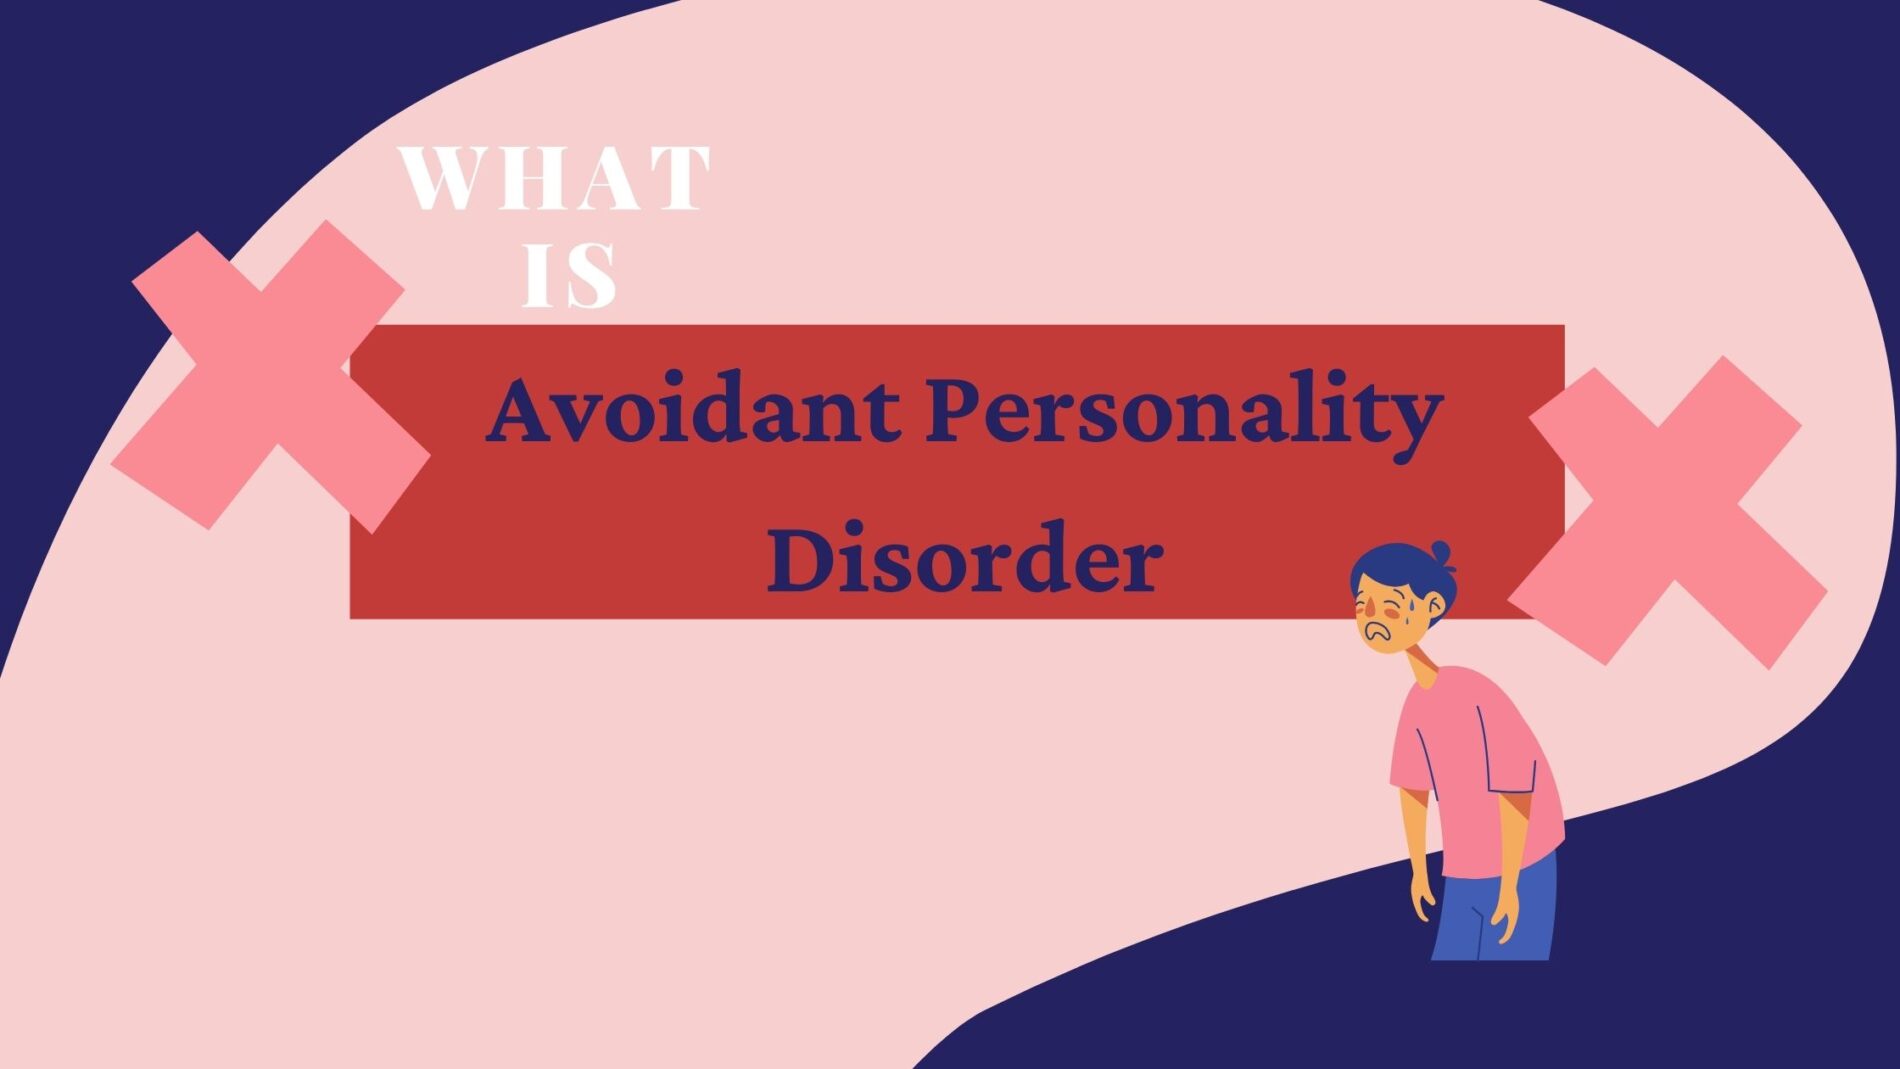 avoidant personality disorder symptoms